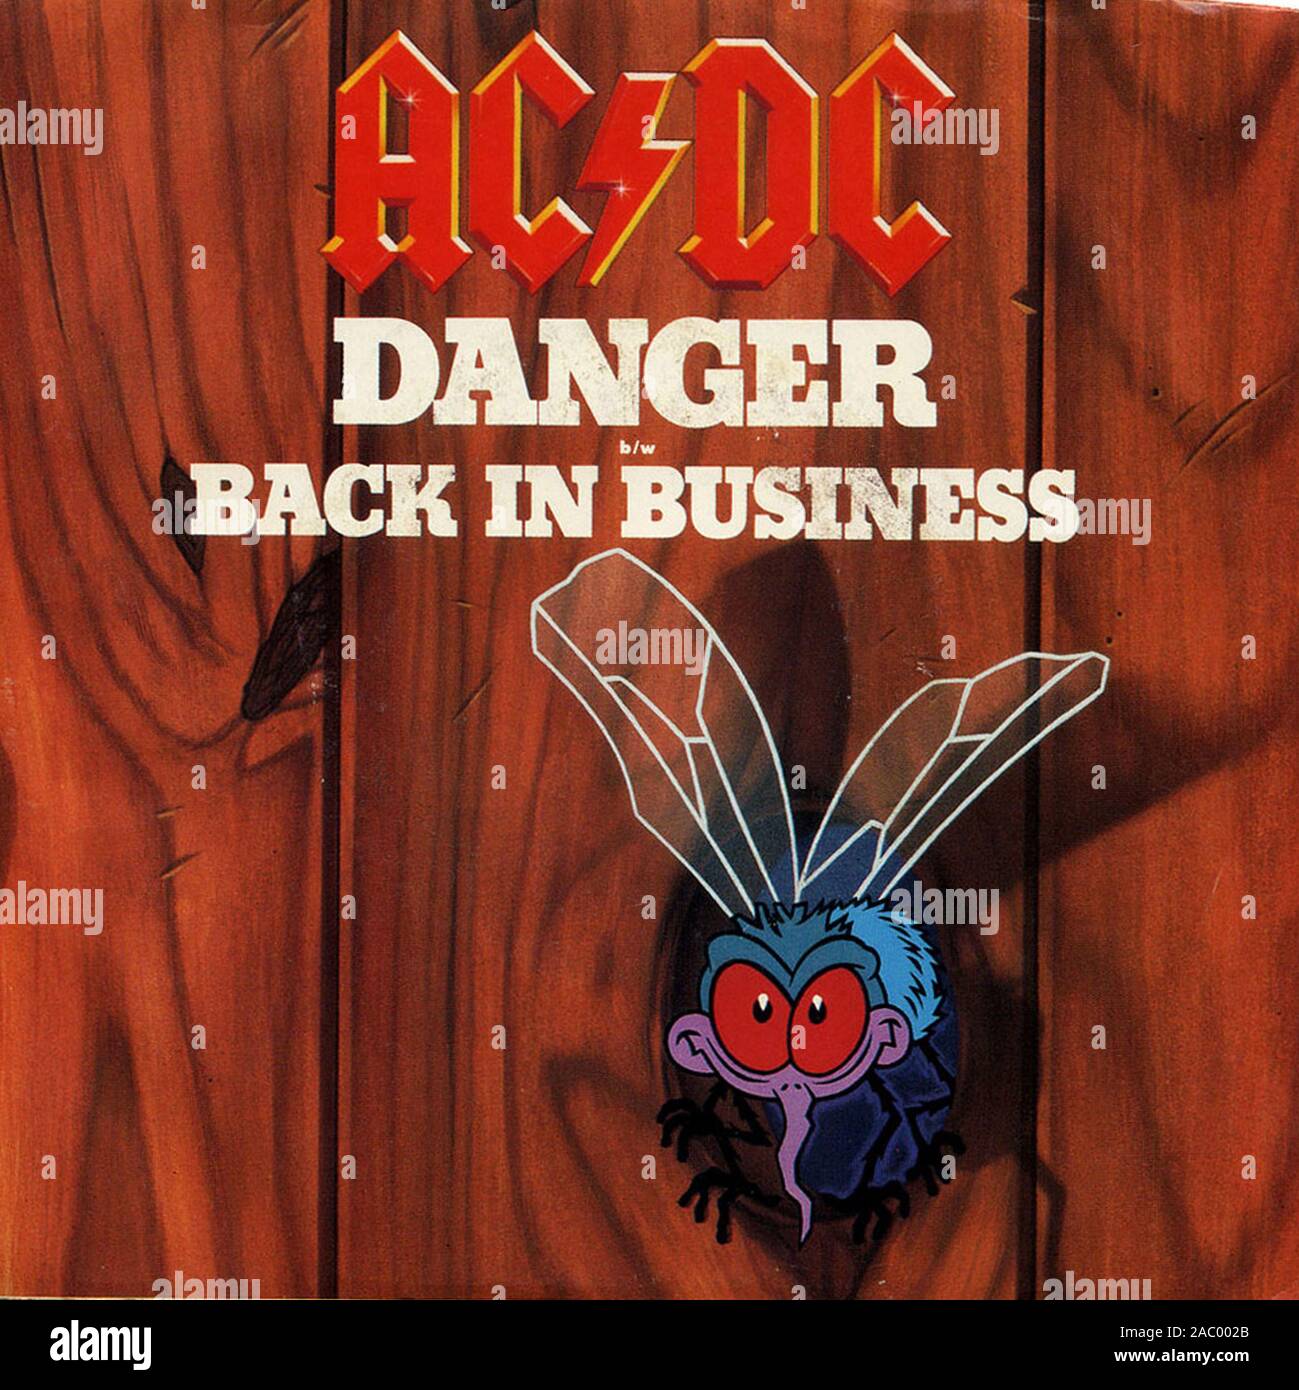 AC DC-Gefahr - Vintage Vinyl Album Cover Stockfotografie - Alamy